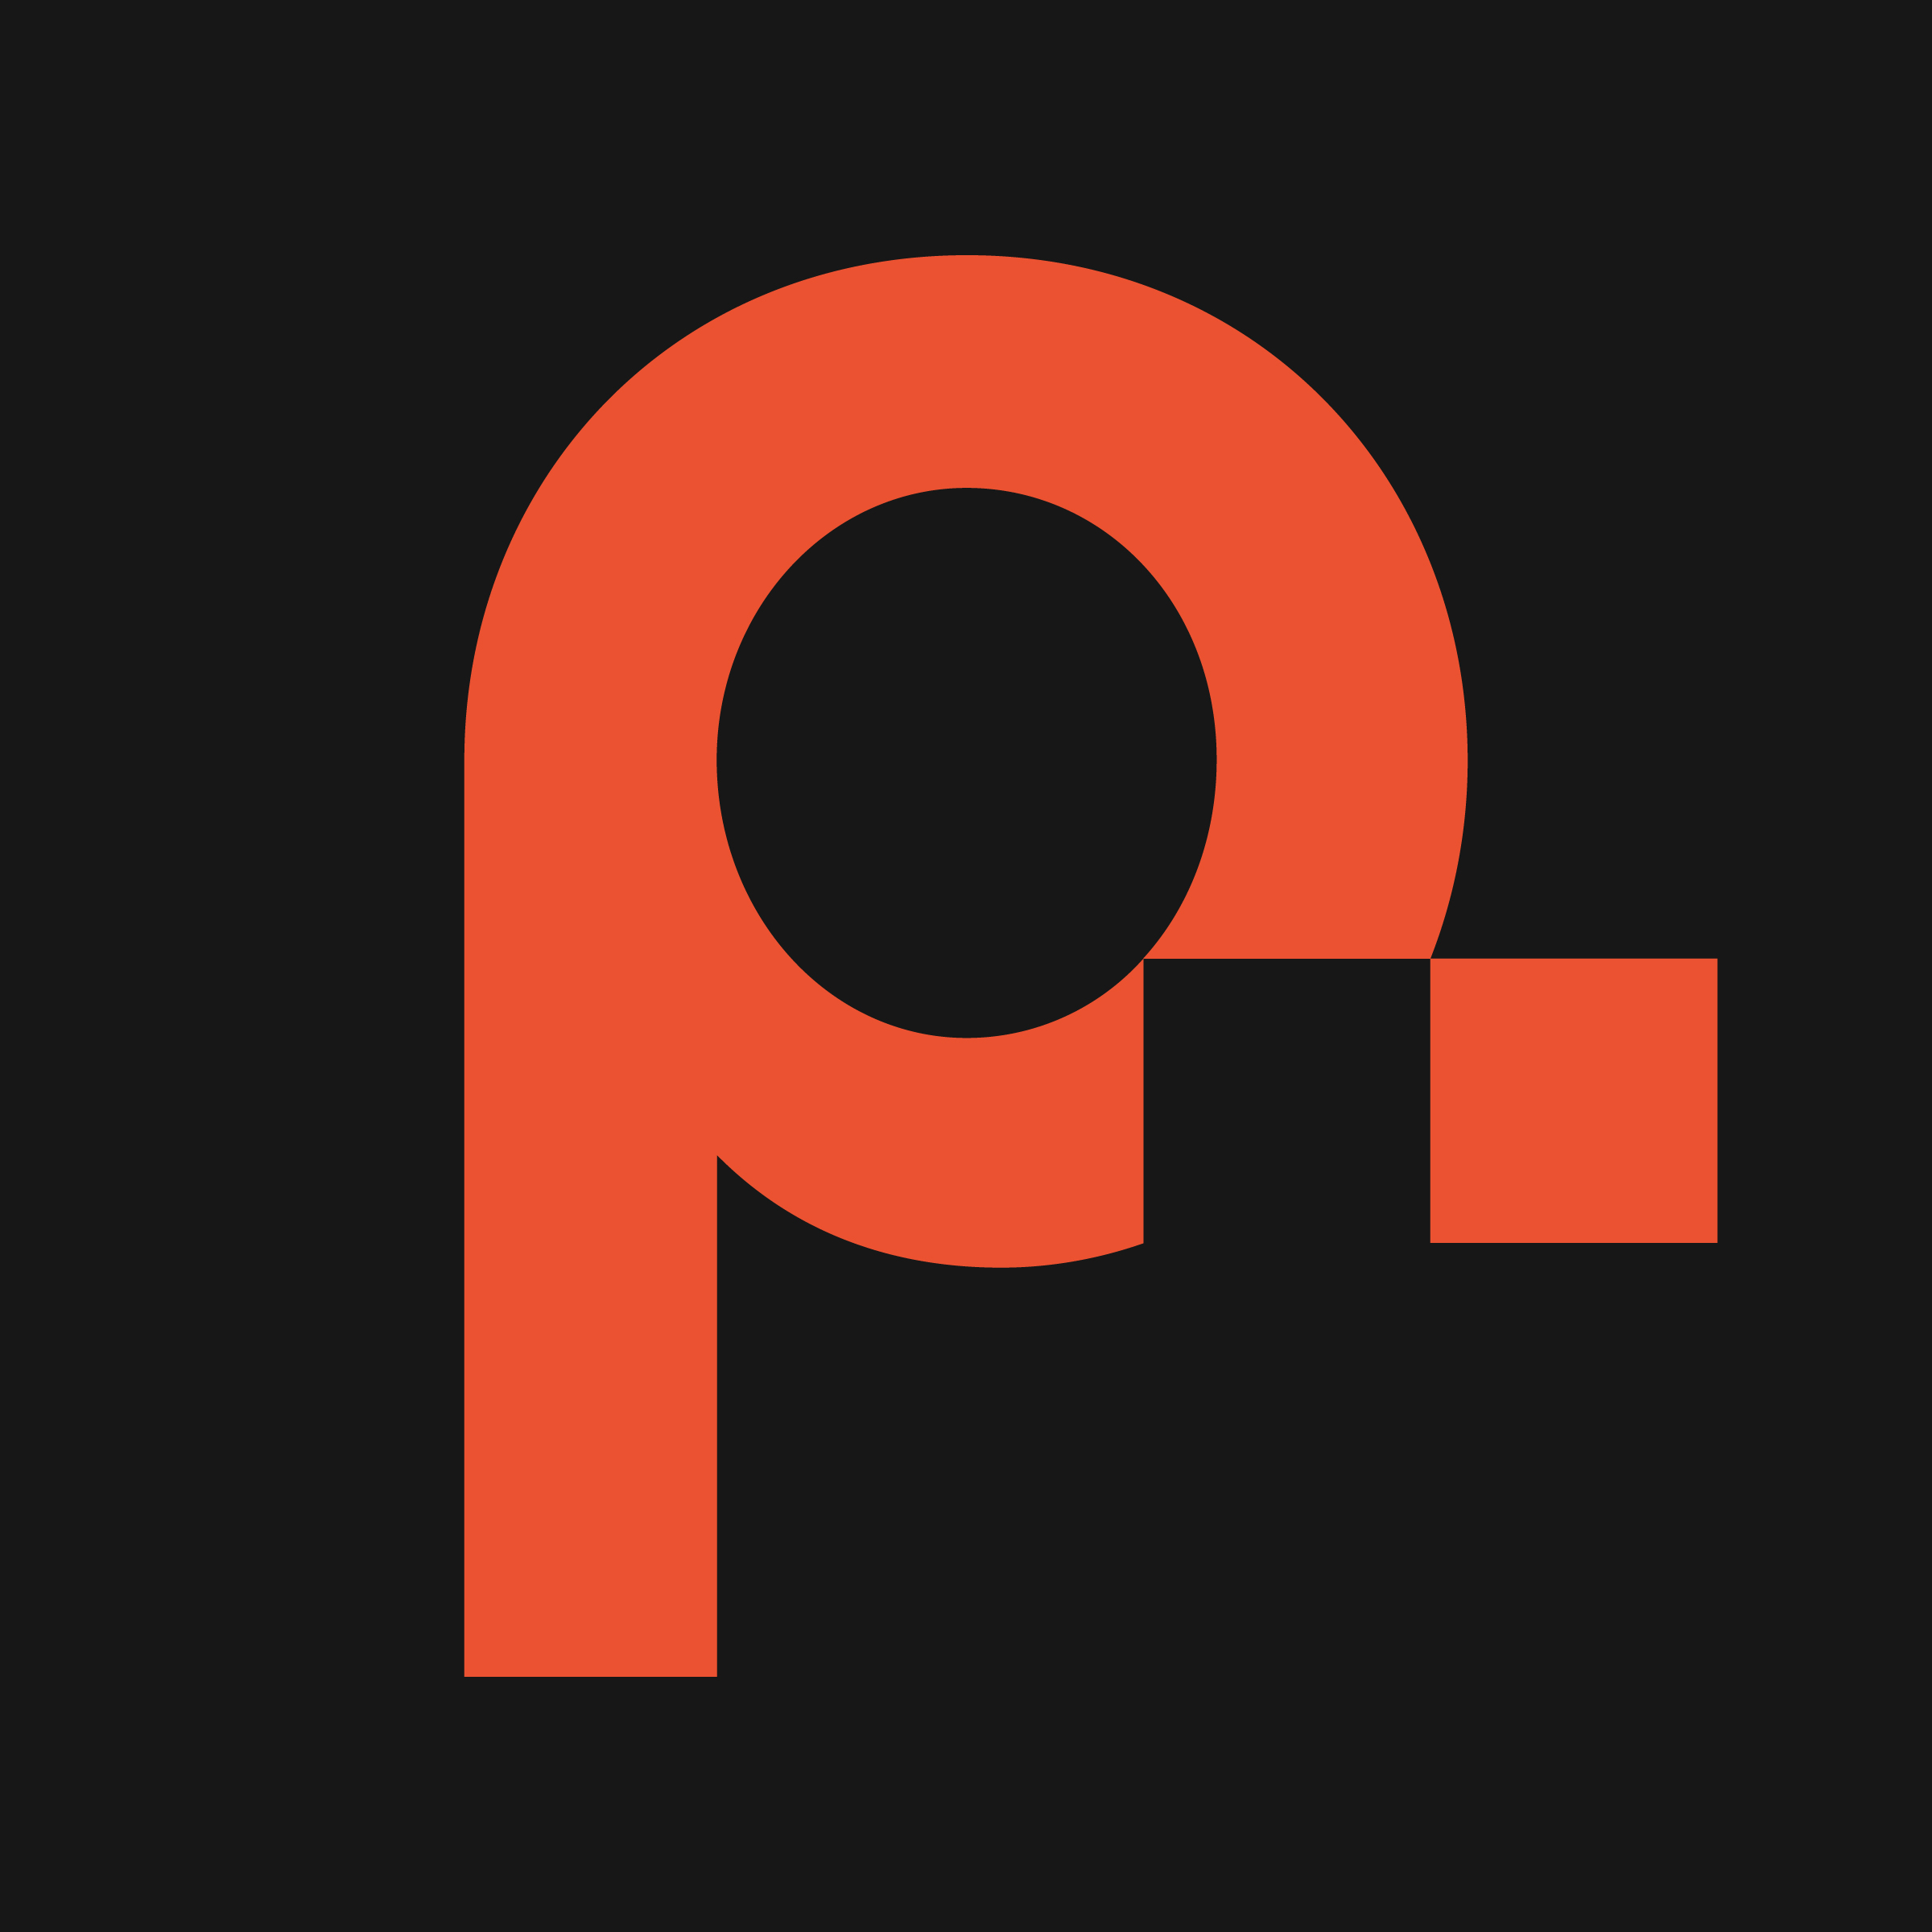 Path Robotics logo